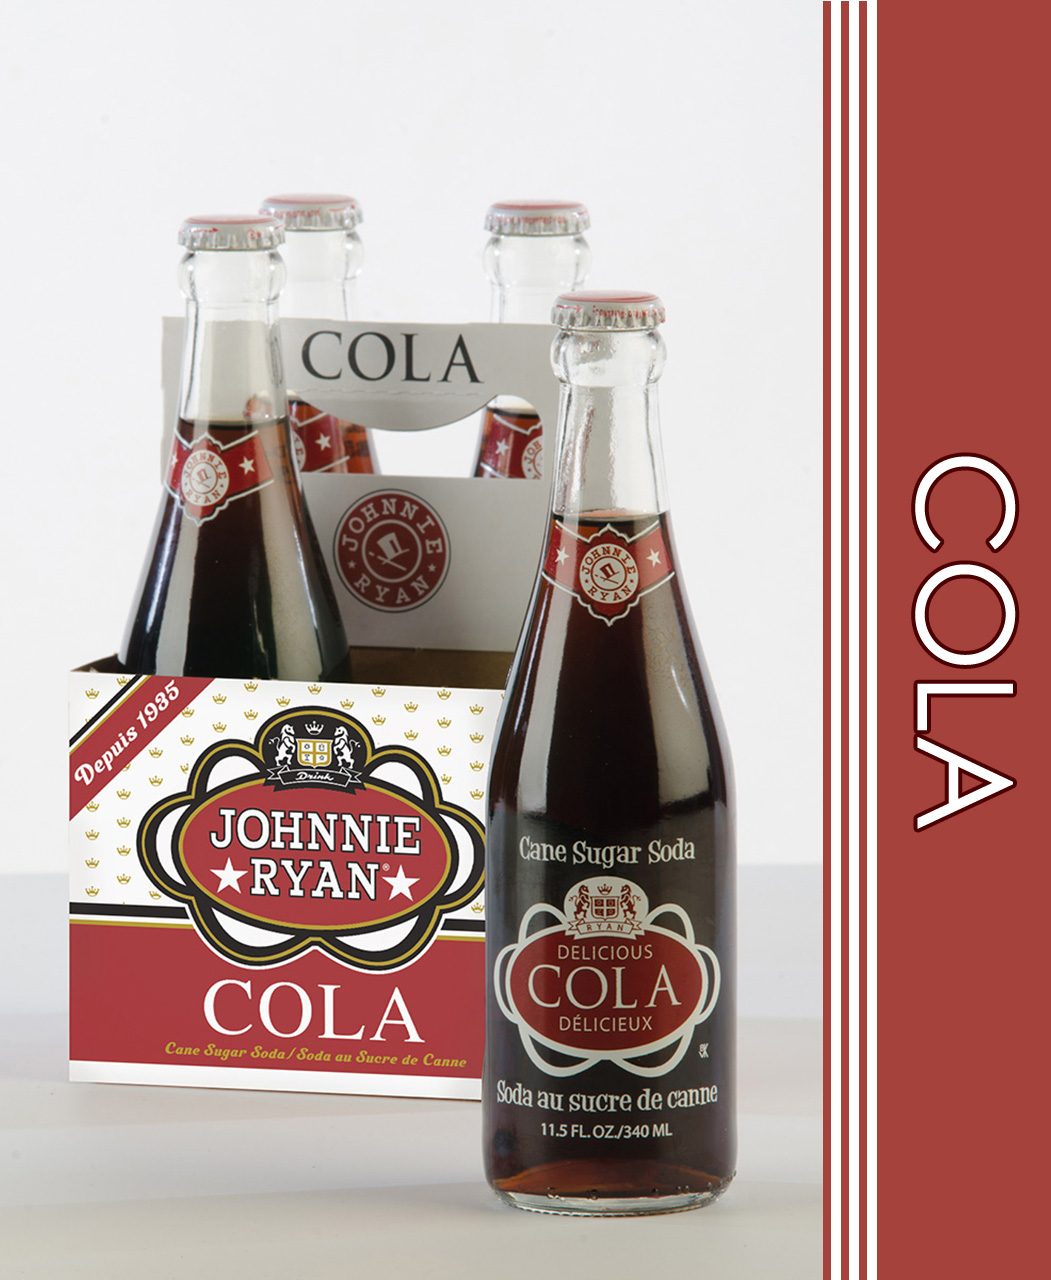 Cola cane sugar soda from Johnnie Ryan beverages in Niagara Falls, NY.